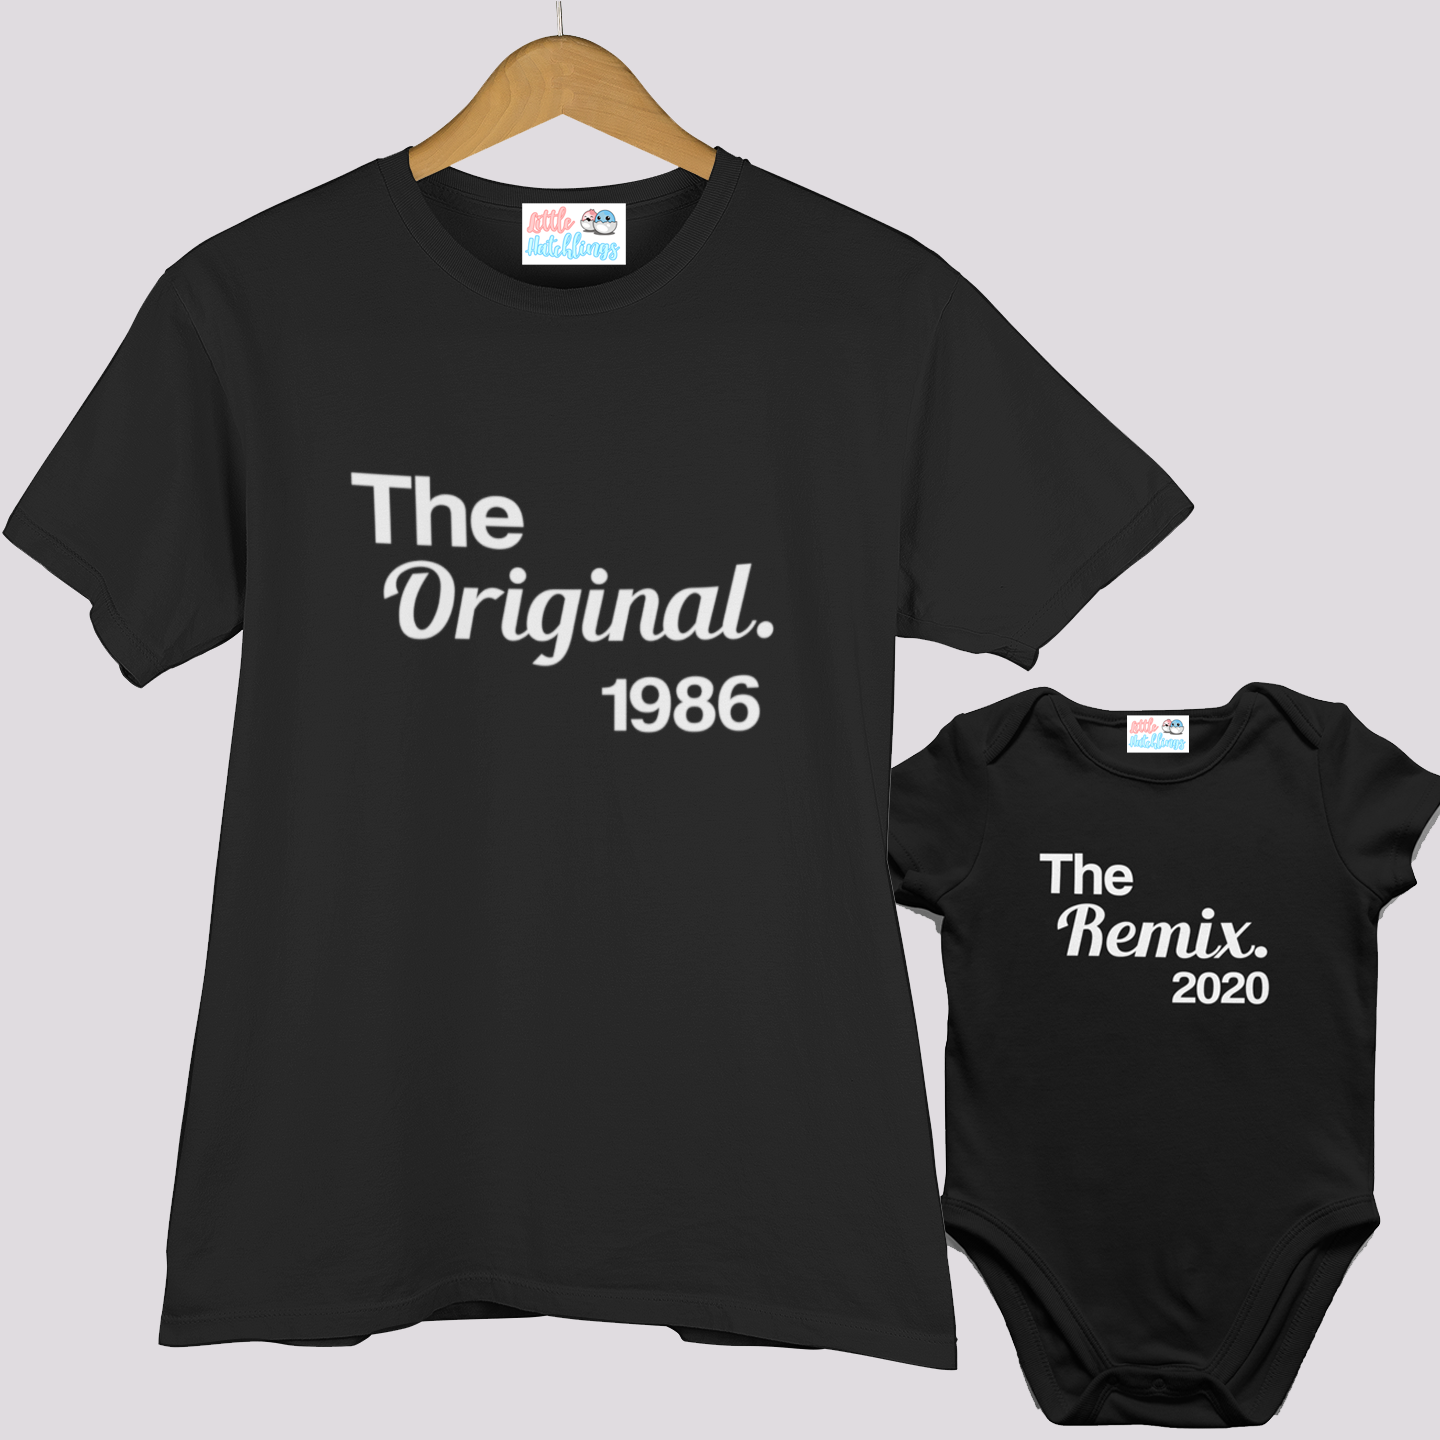 The Original + The Remix Black Combo - Adult Tshirt + Full Romper